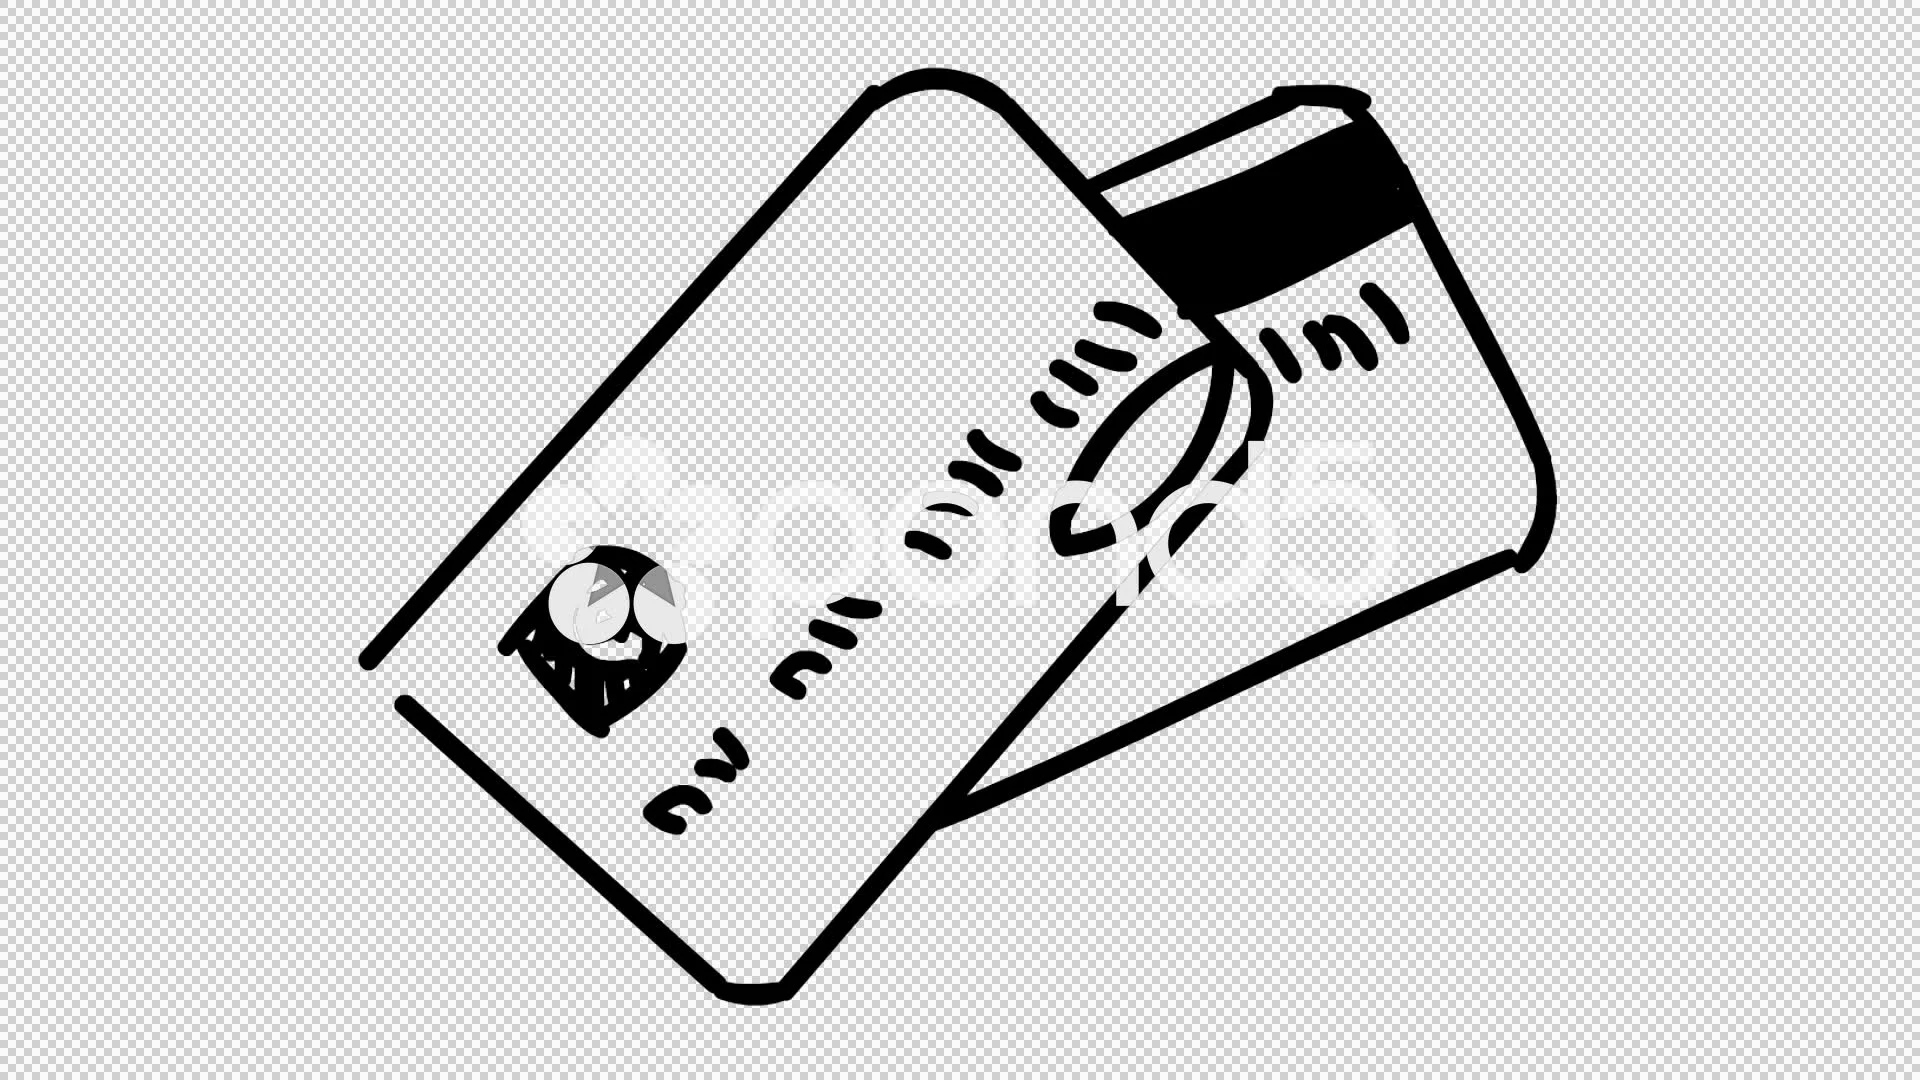 Single sketch bank credit card Royalty Free Vector Image